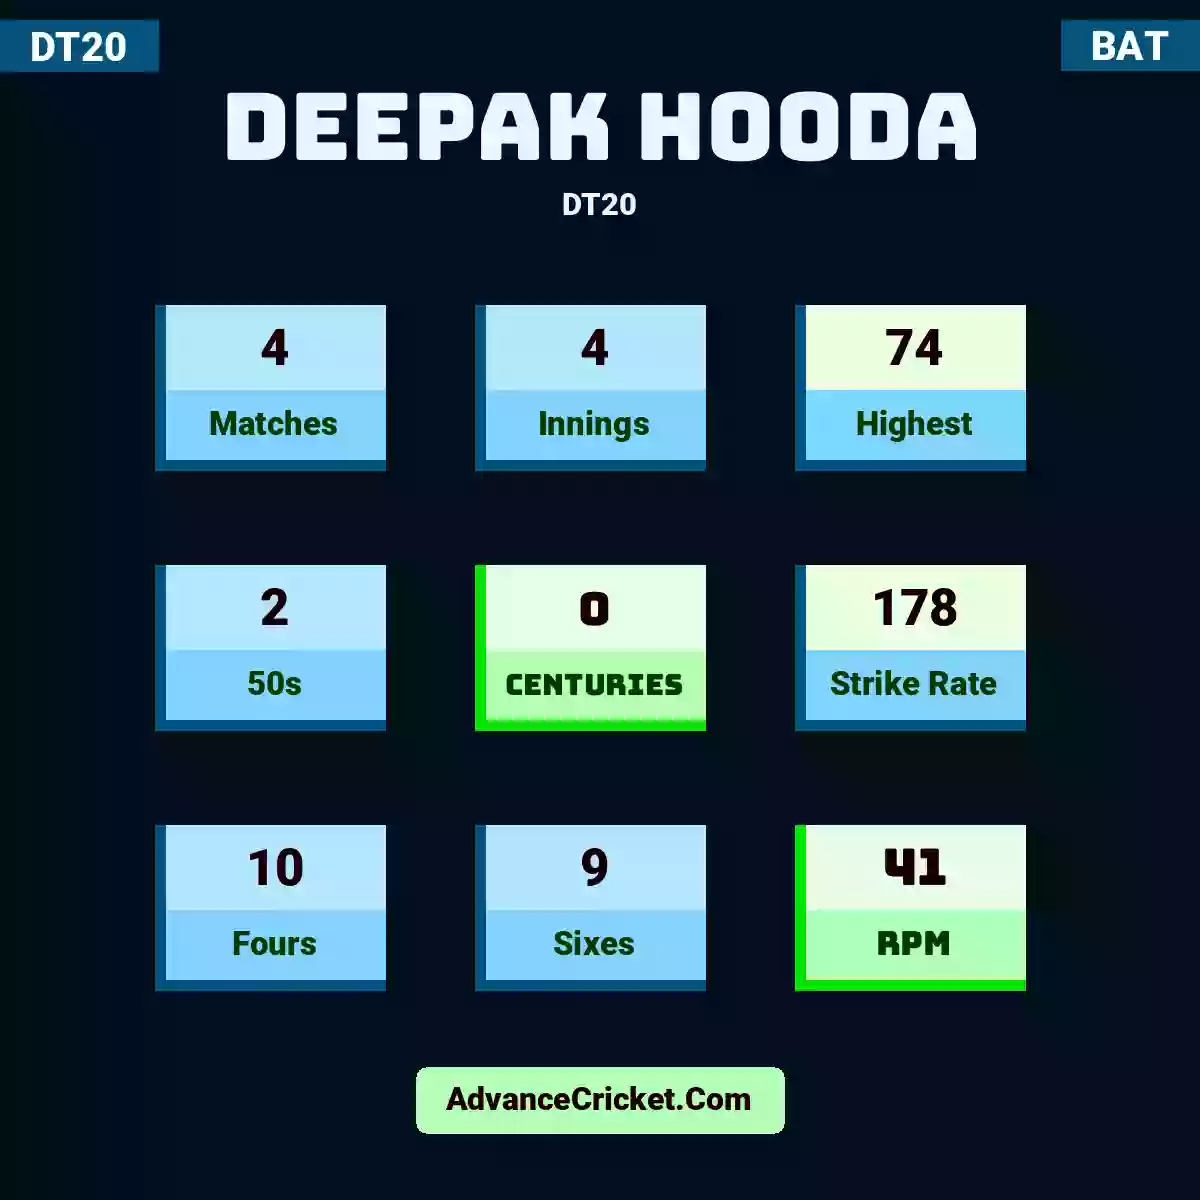 Deepak Hooda DT20 , Deepak Hooda played 4 matches, scored 74 runs as highest, 2 half-centuries, and 0 centuries, with a strike rate of 178. D.Hooda hit 10 fours and 9 sixes, with an RPM of 41.